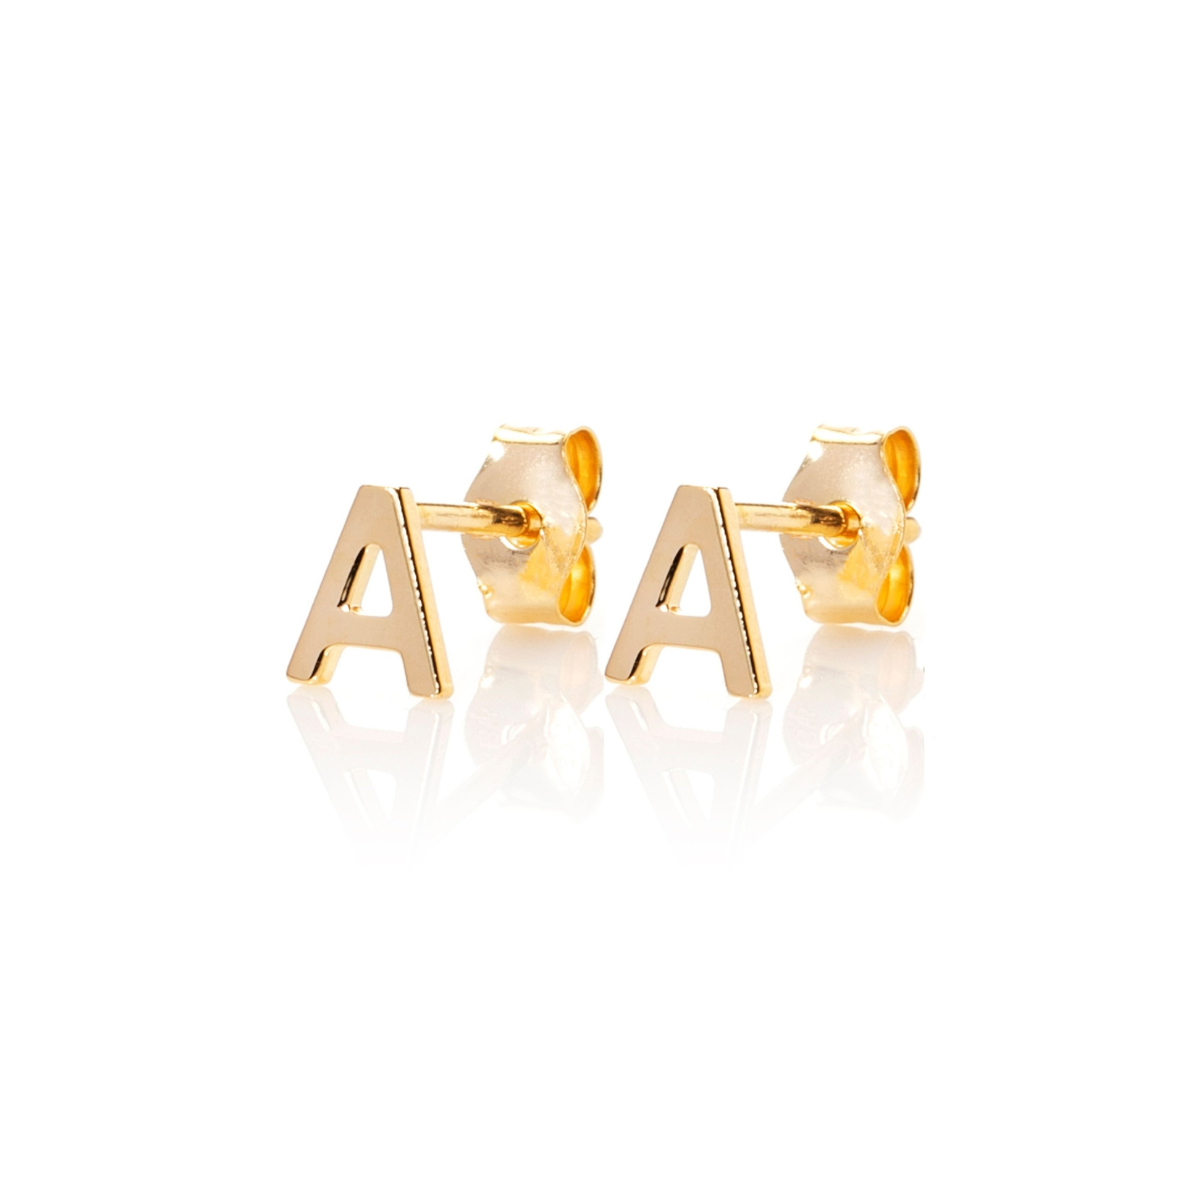 Personalised 9 Carat Gold Initial Stud Earrings